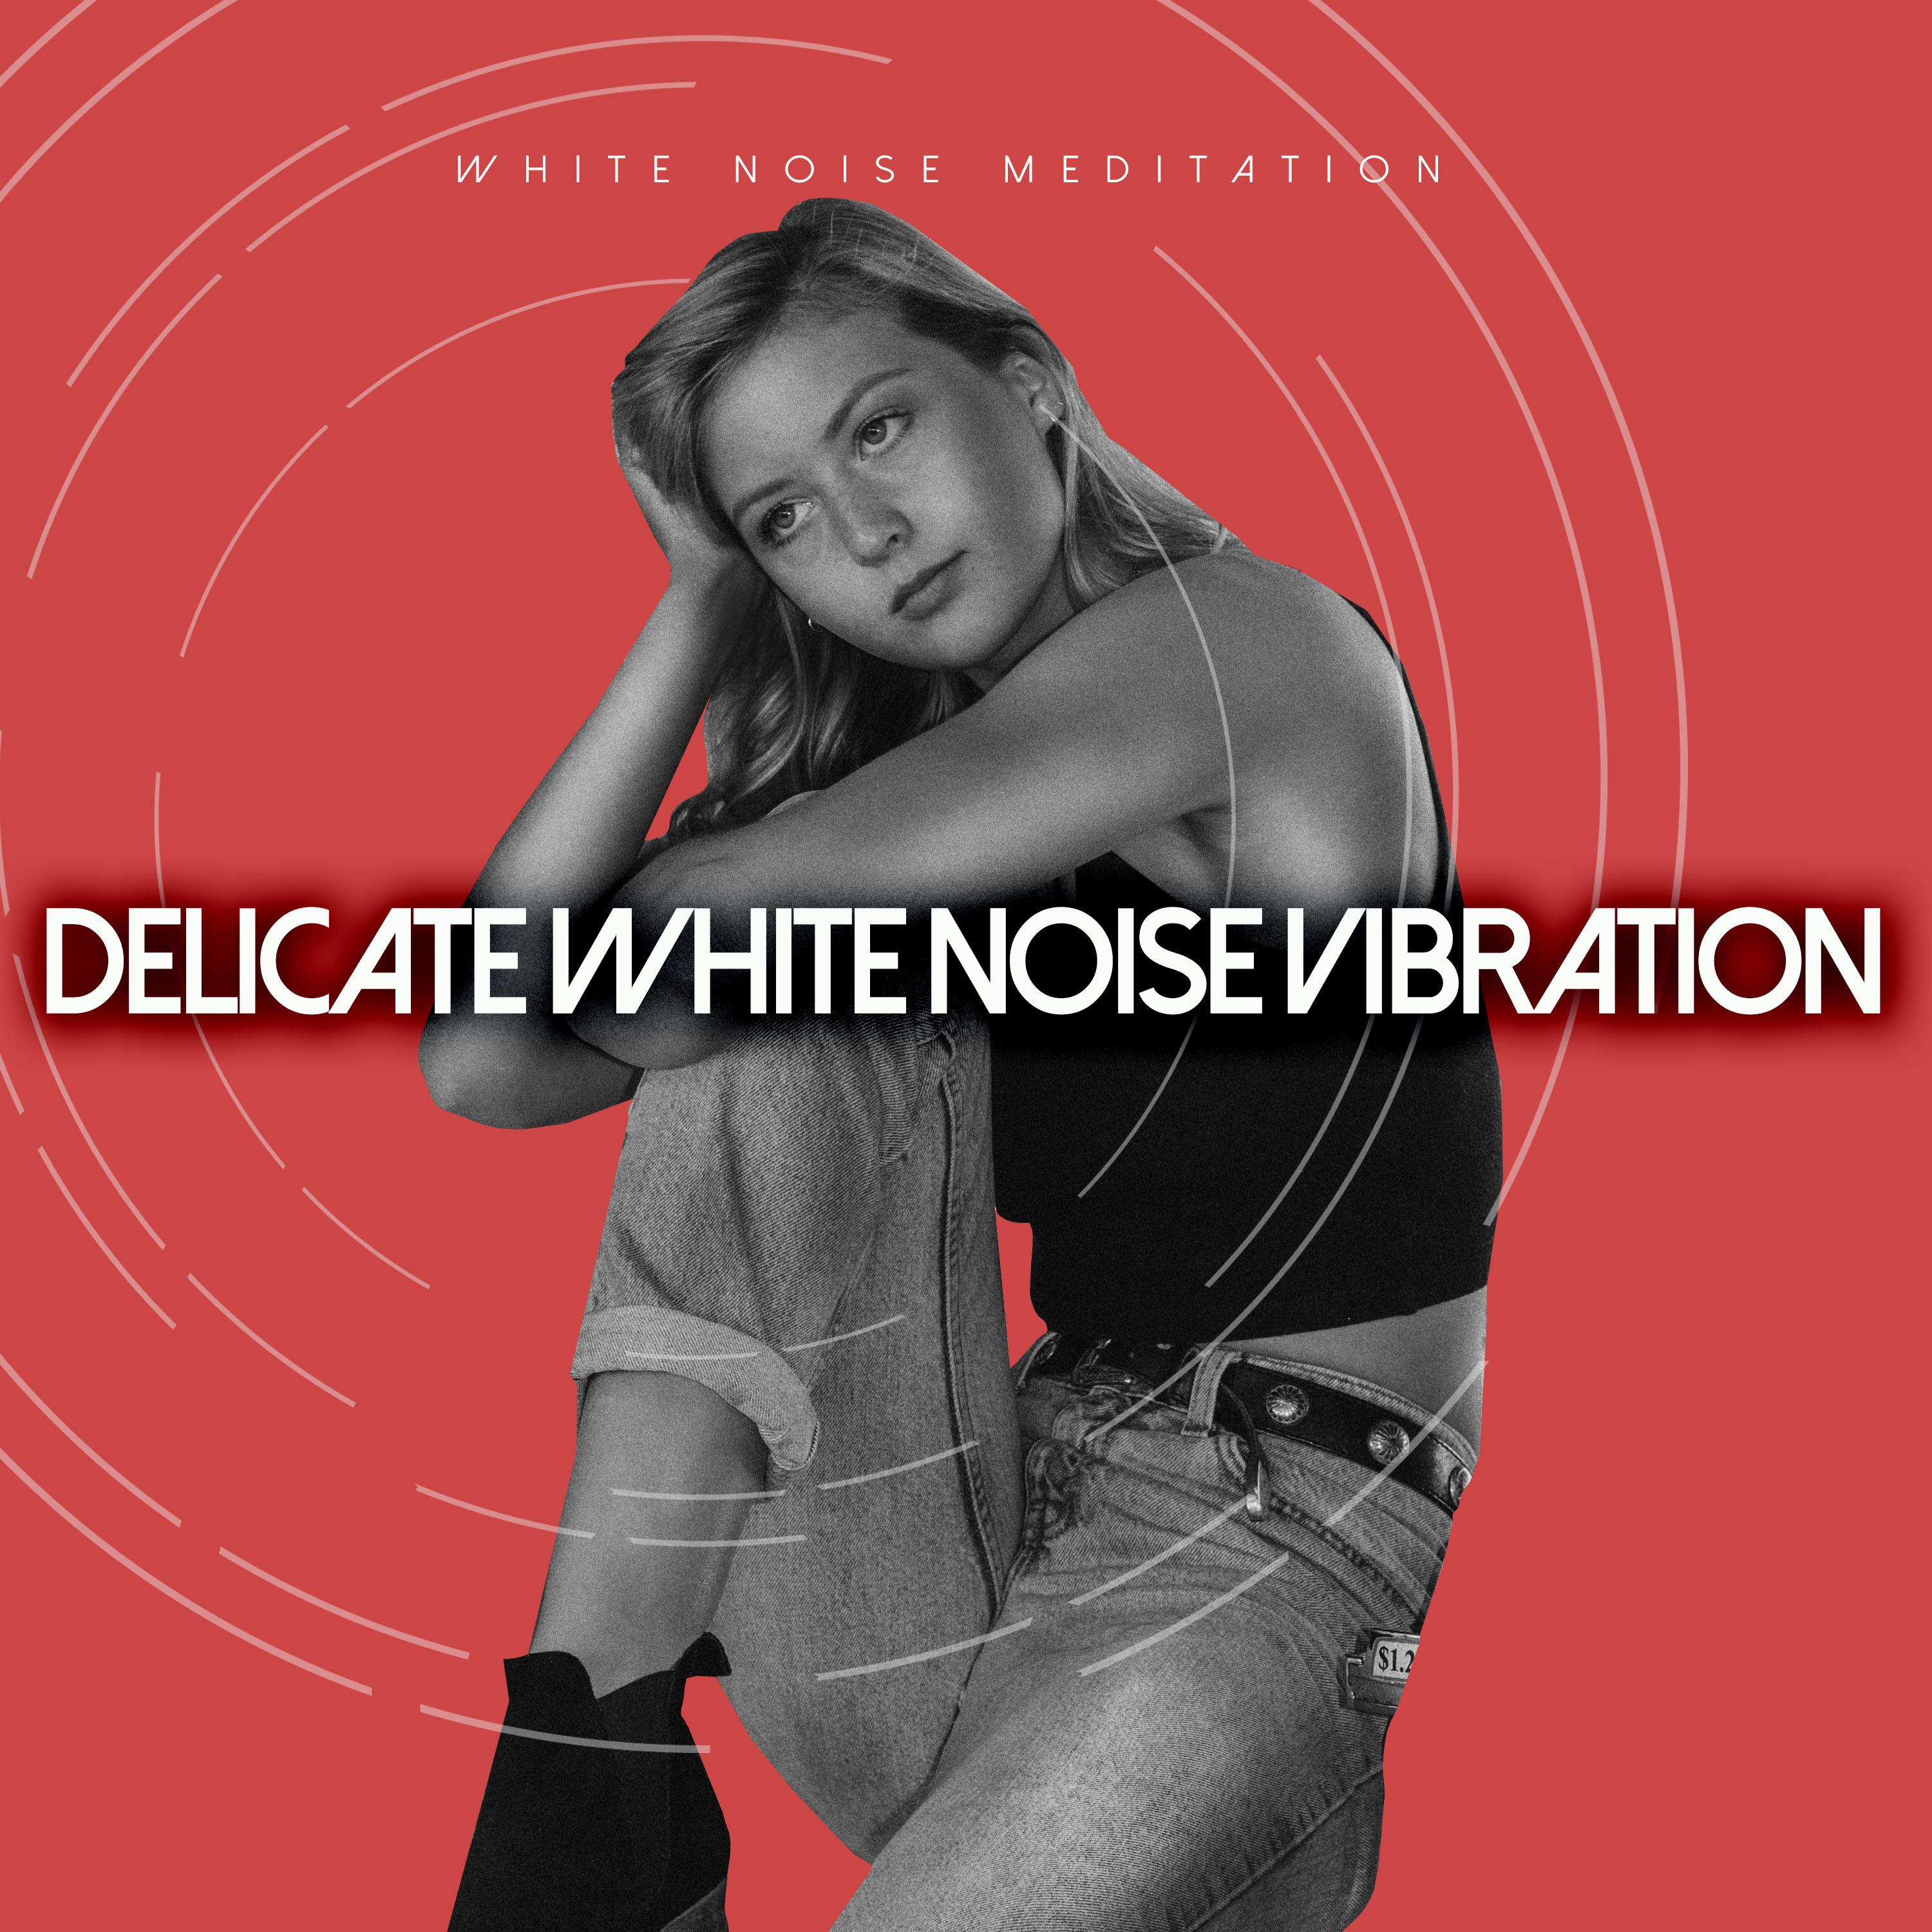 Delicate White Noise Vibration